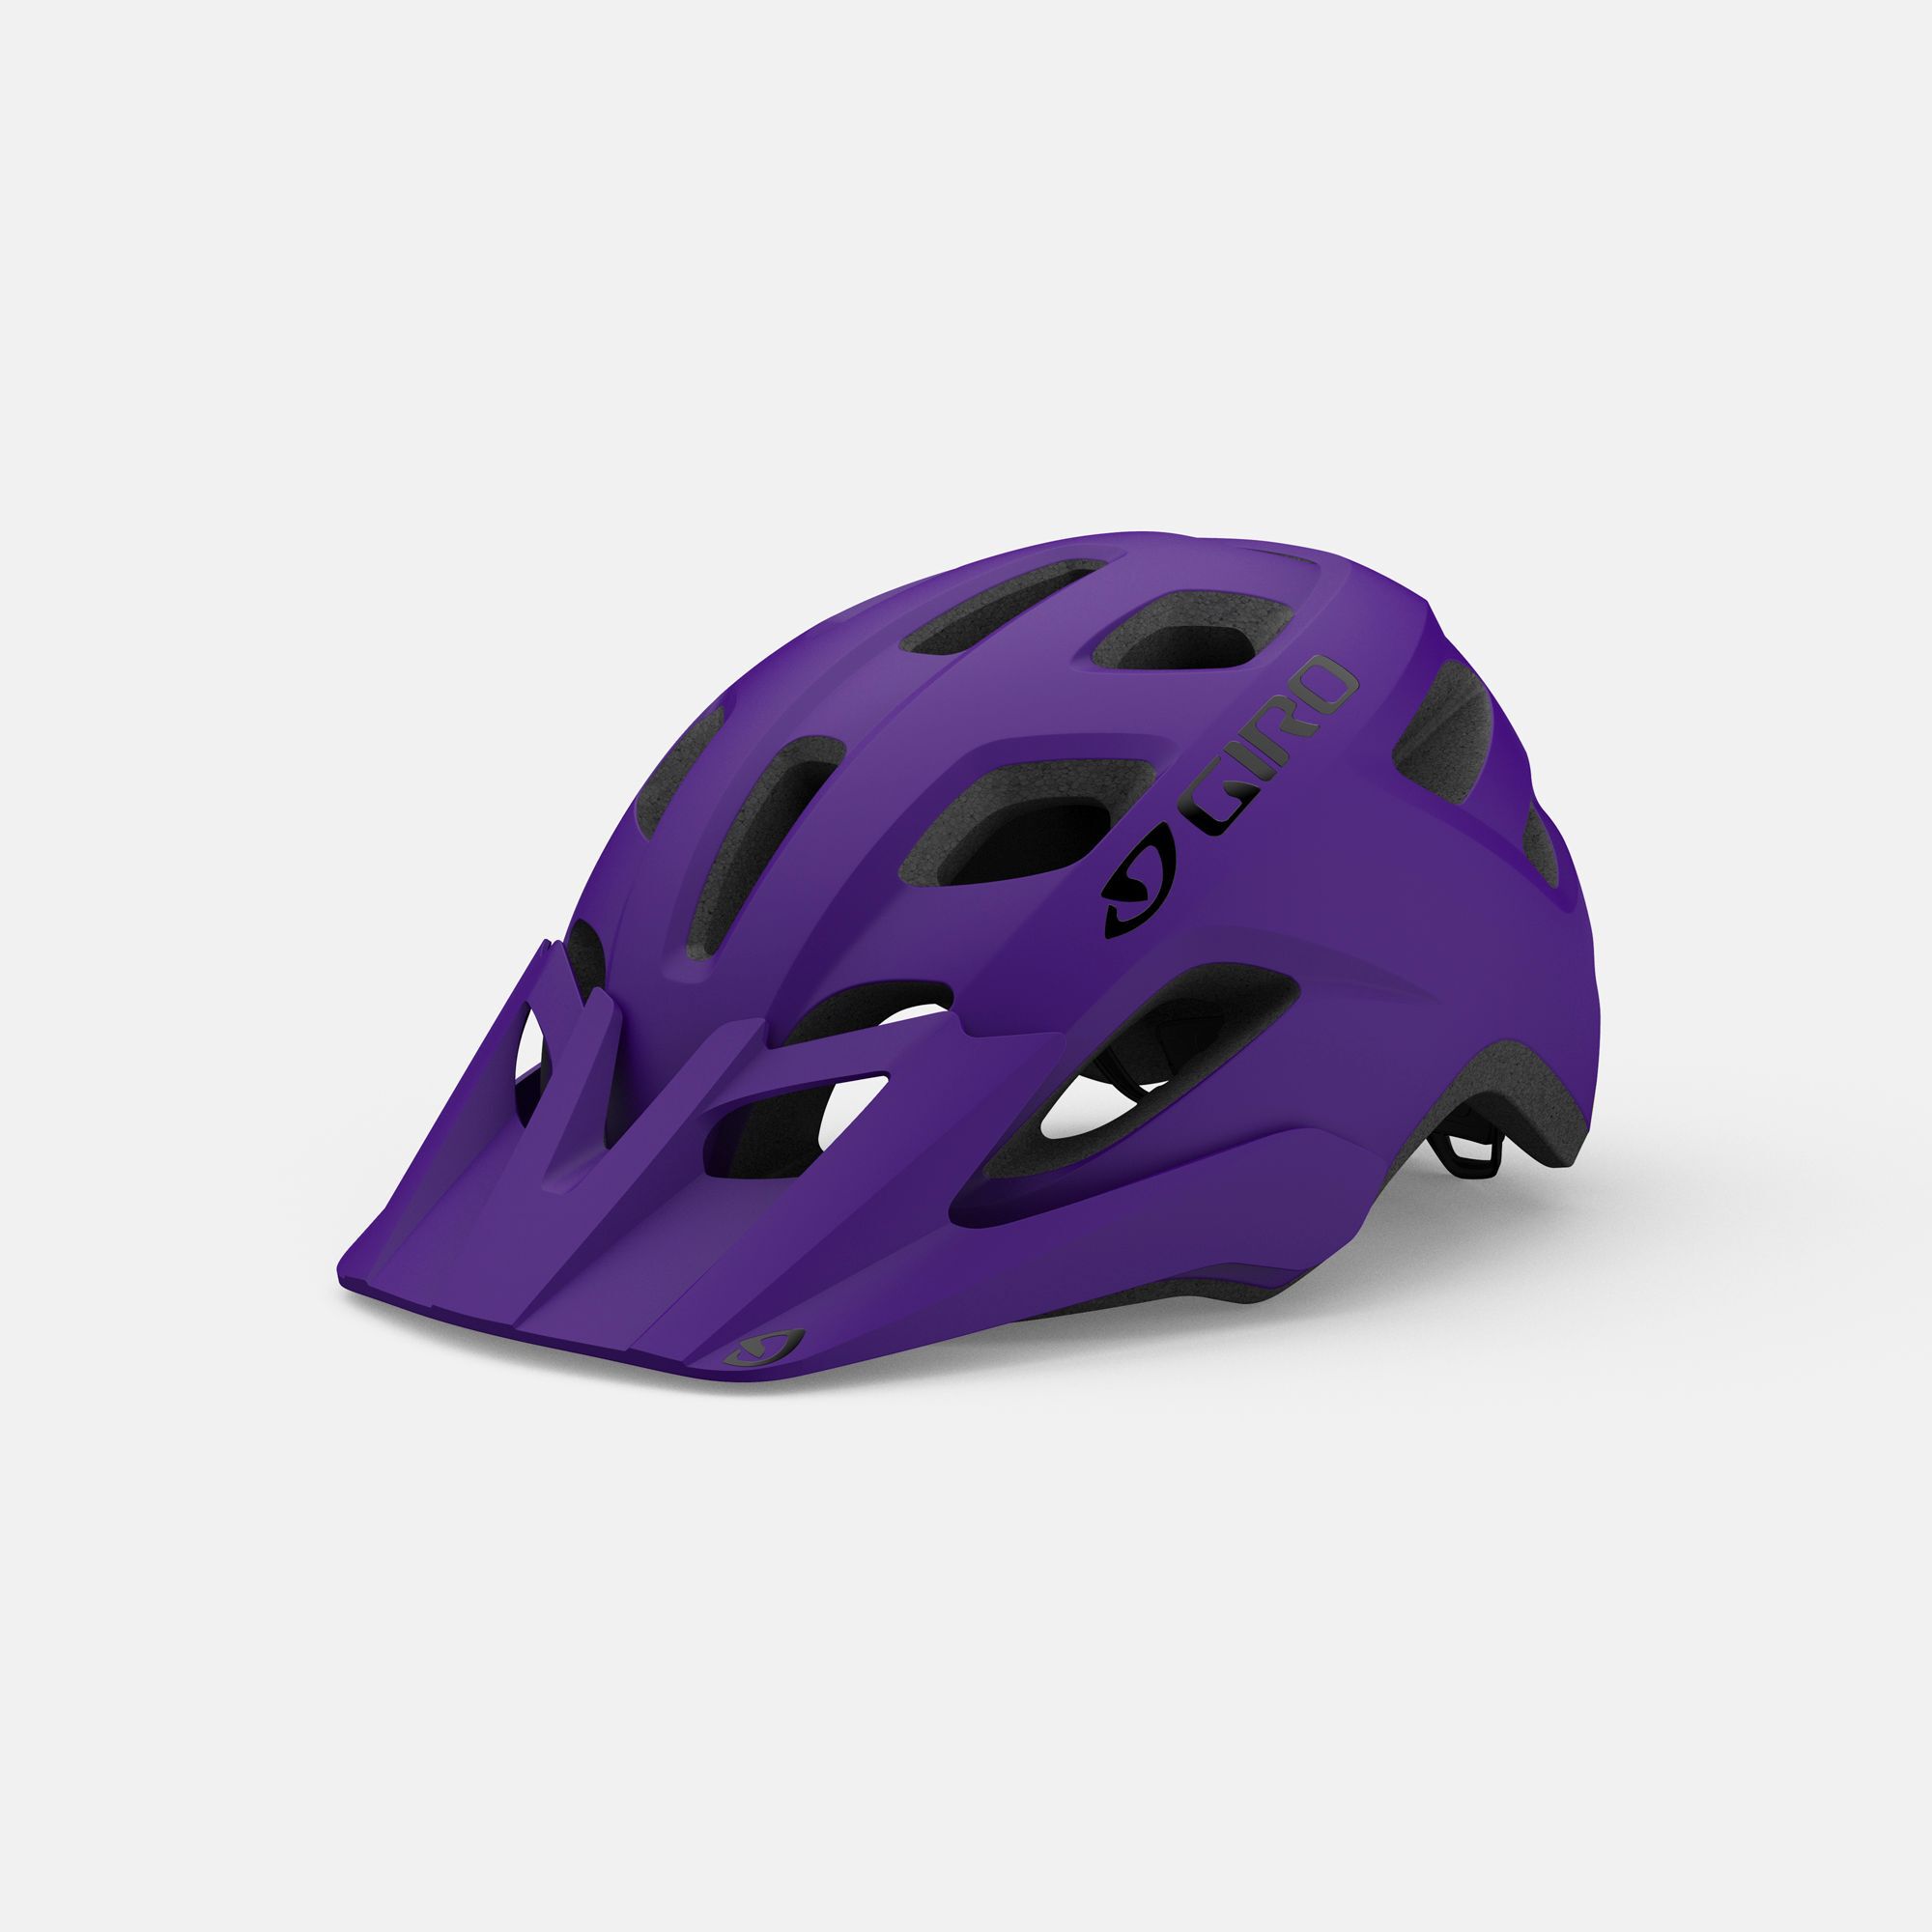 Variation Color UXY 50-57 cm Giro Tremor Mips Bike Helmet 